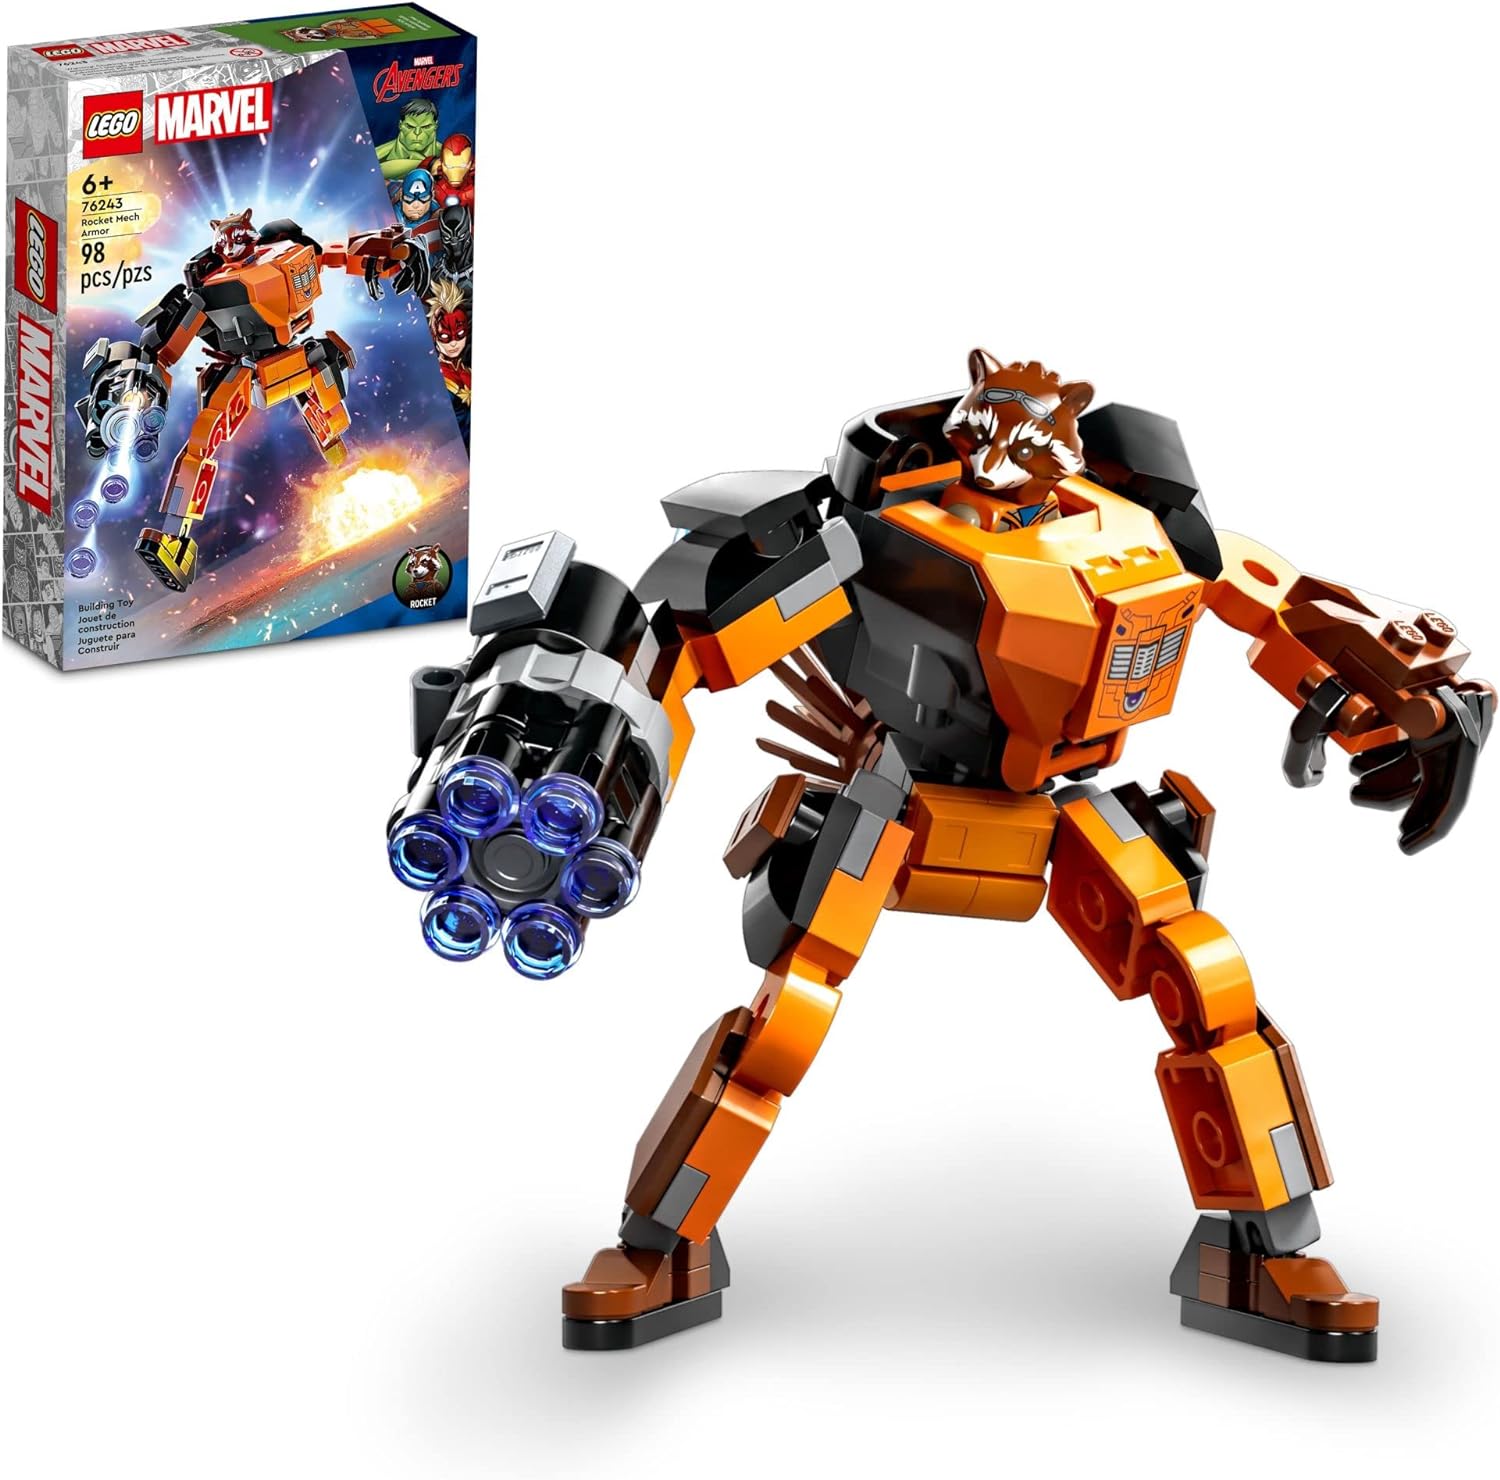 $11.75: LEGO Marvel Rocket Mech Armor (76243) Amazon